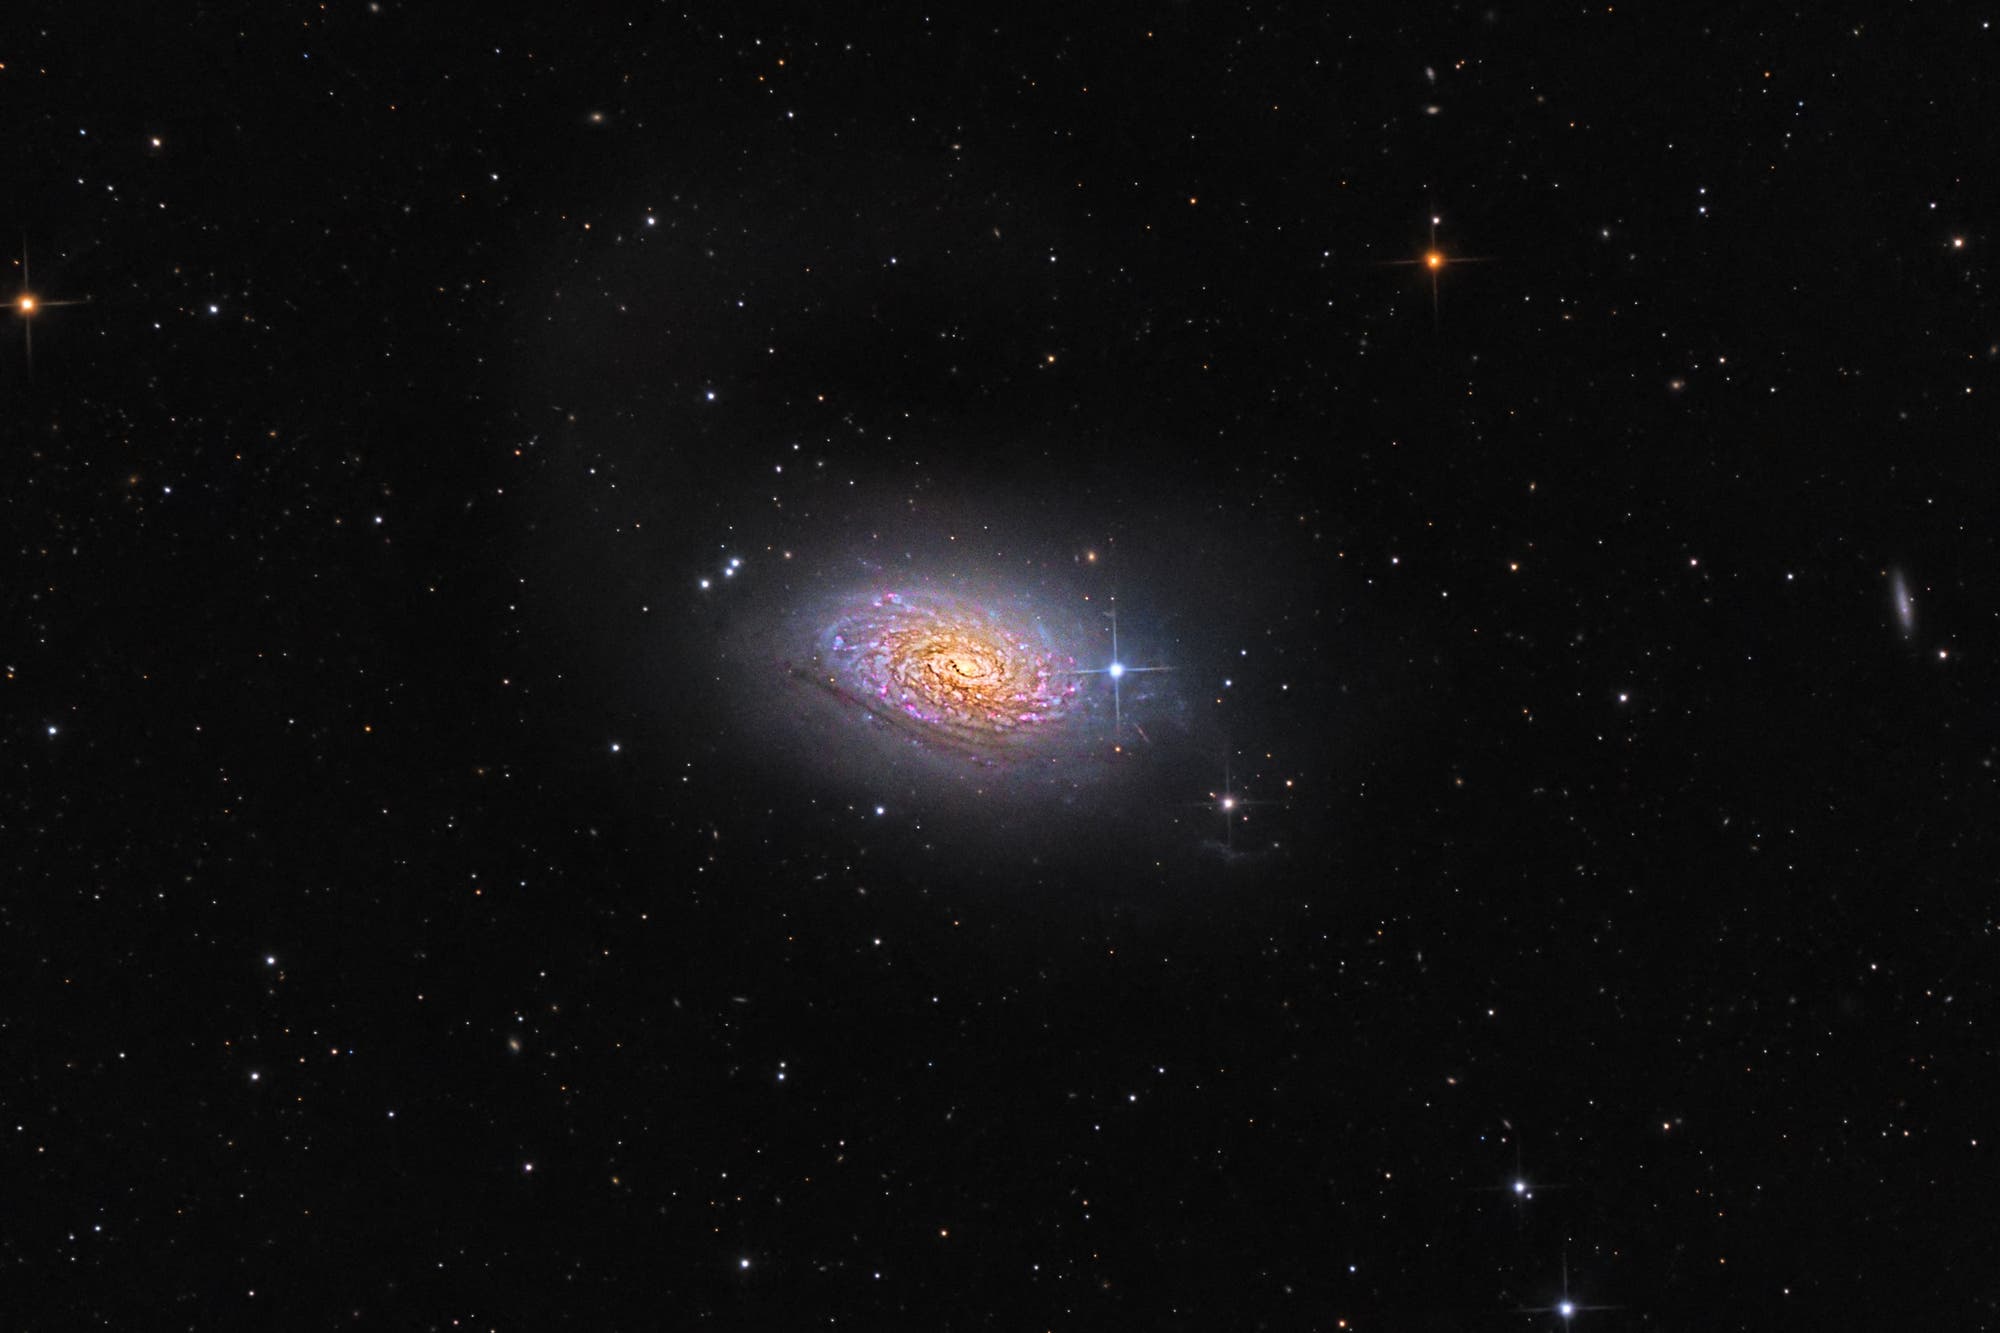 Sonnenblumen-Galaxie, Messier 63